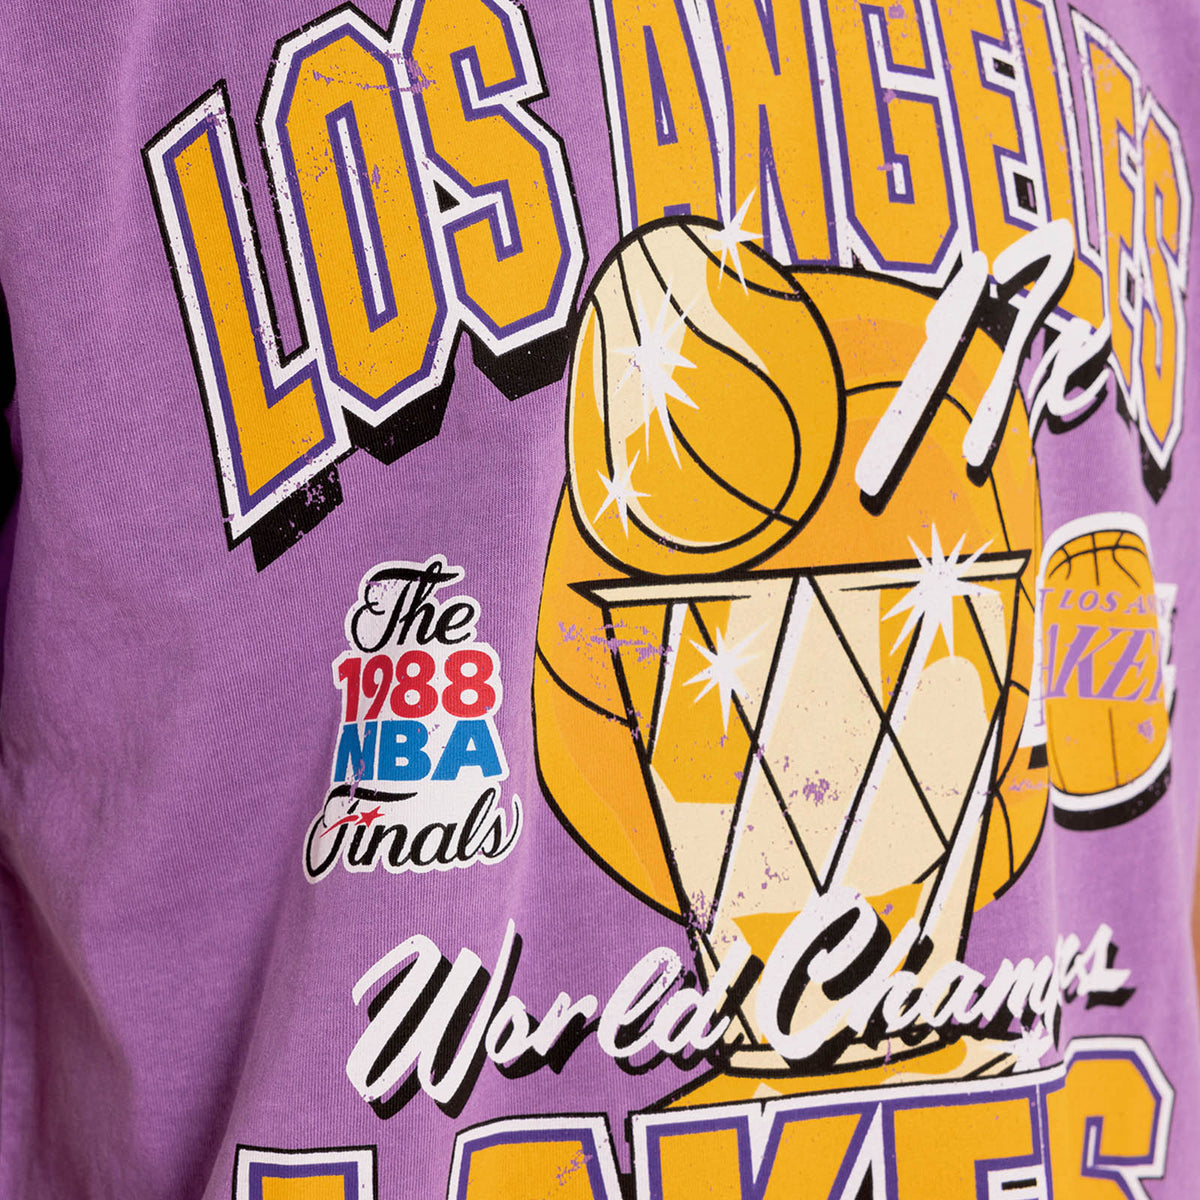 Los Angeles Lakers Champ History Vintage Tee - Faded Purple - Throwback